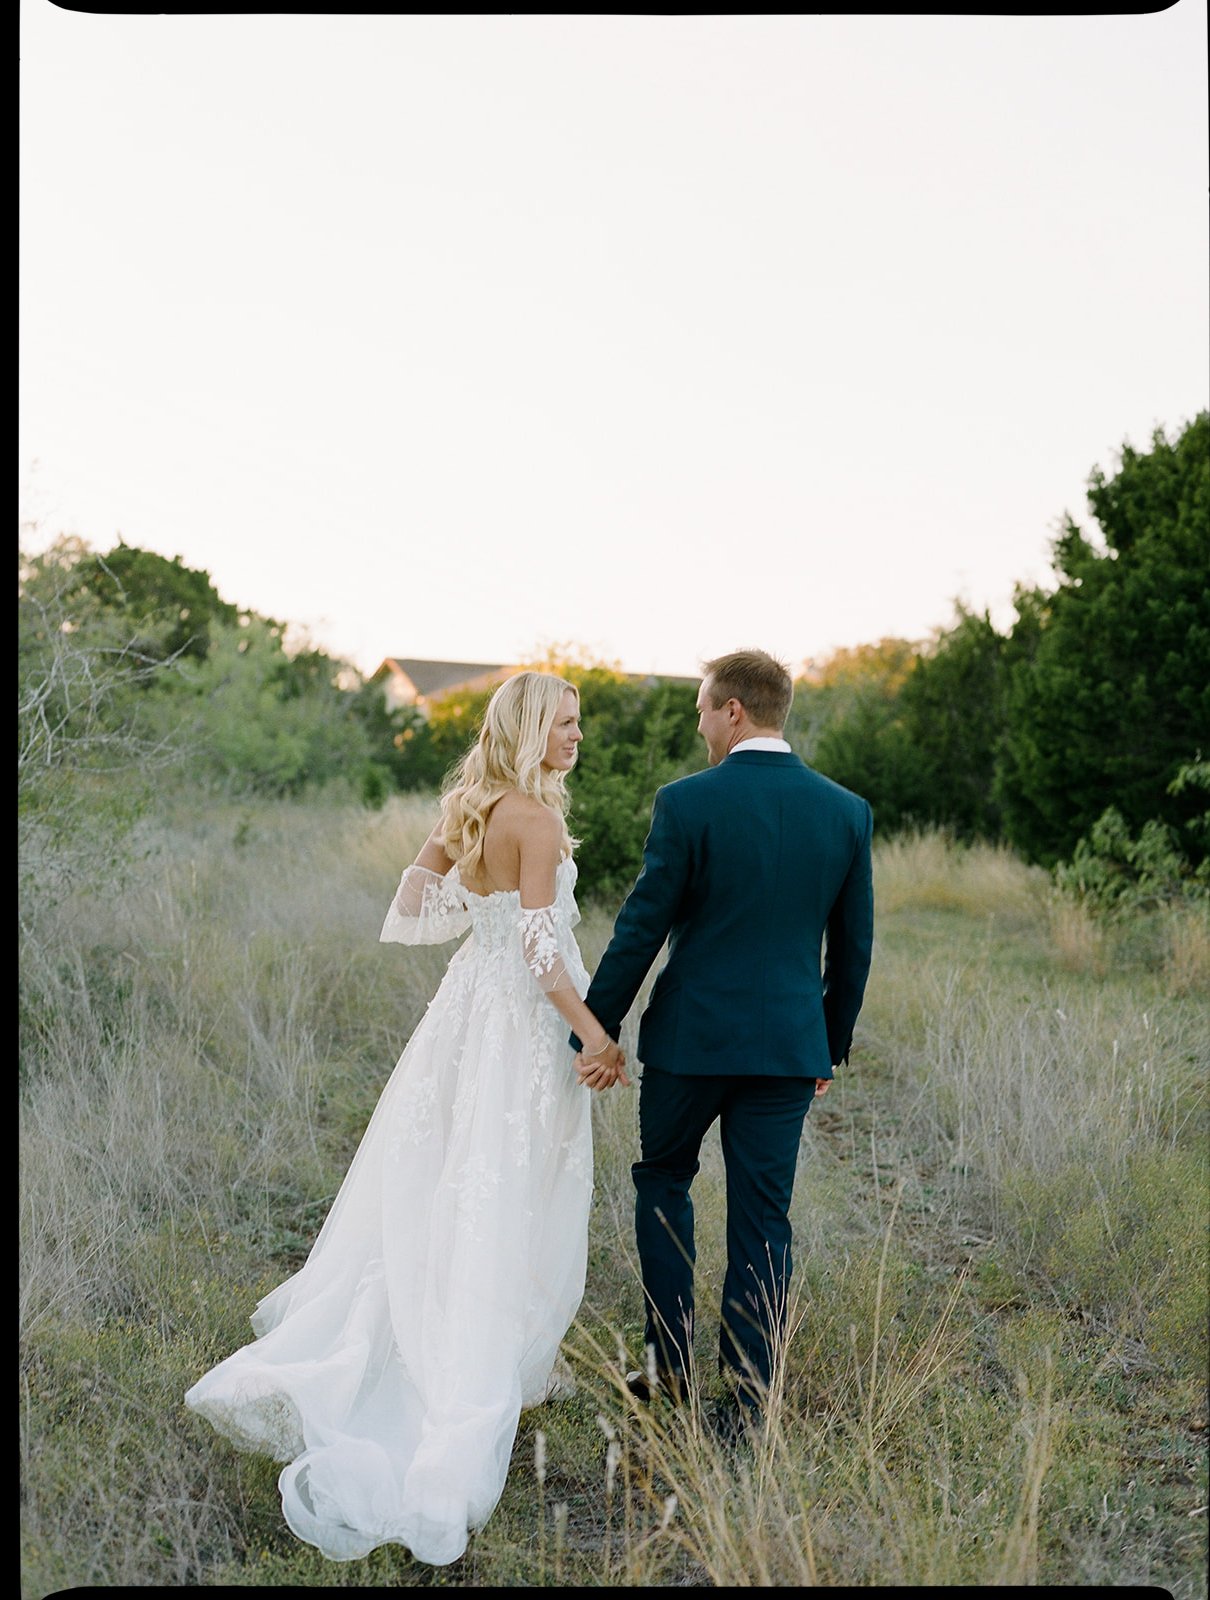 Best-Austin-Wedding-Photographers-Elopement-Film-35mm-Asheville-Santa-Barbara-Backyard-107.jpg